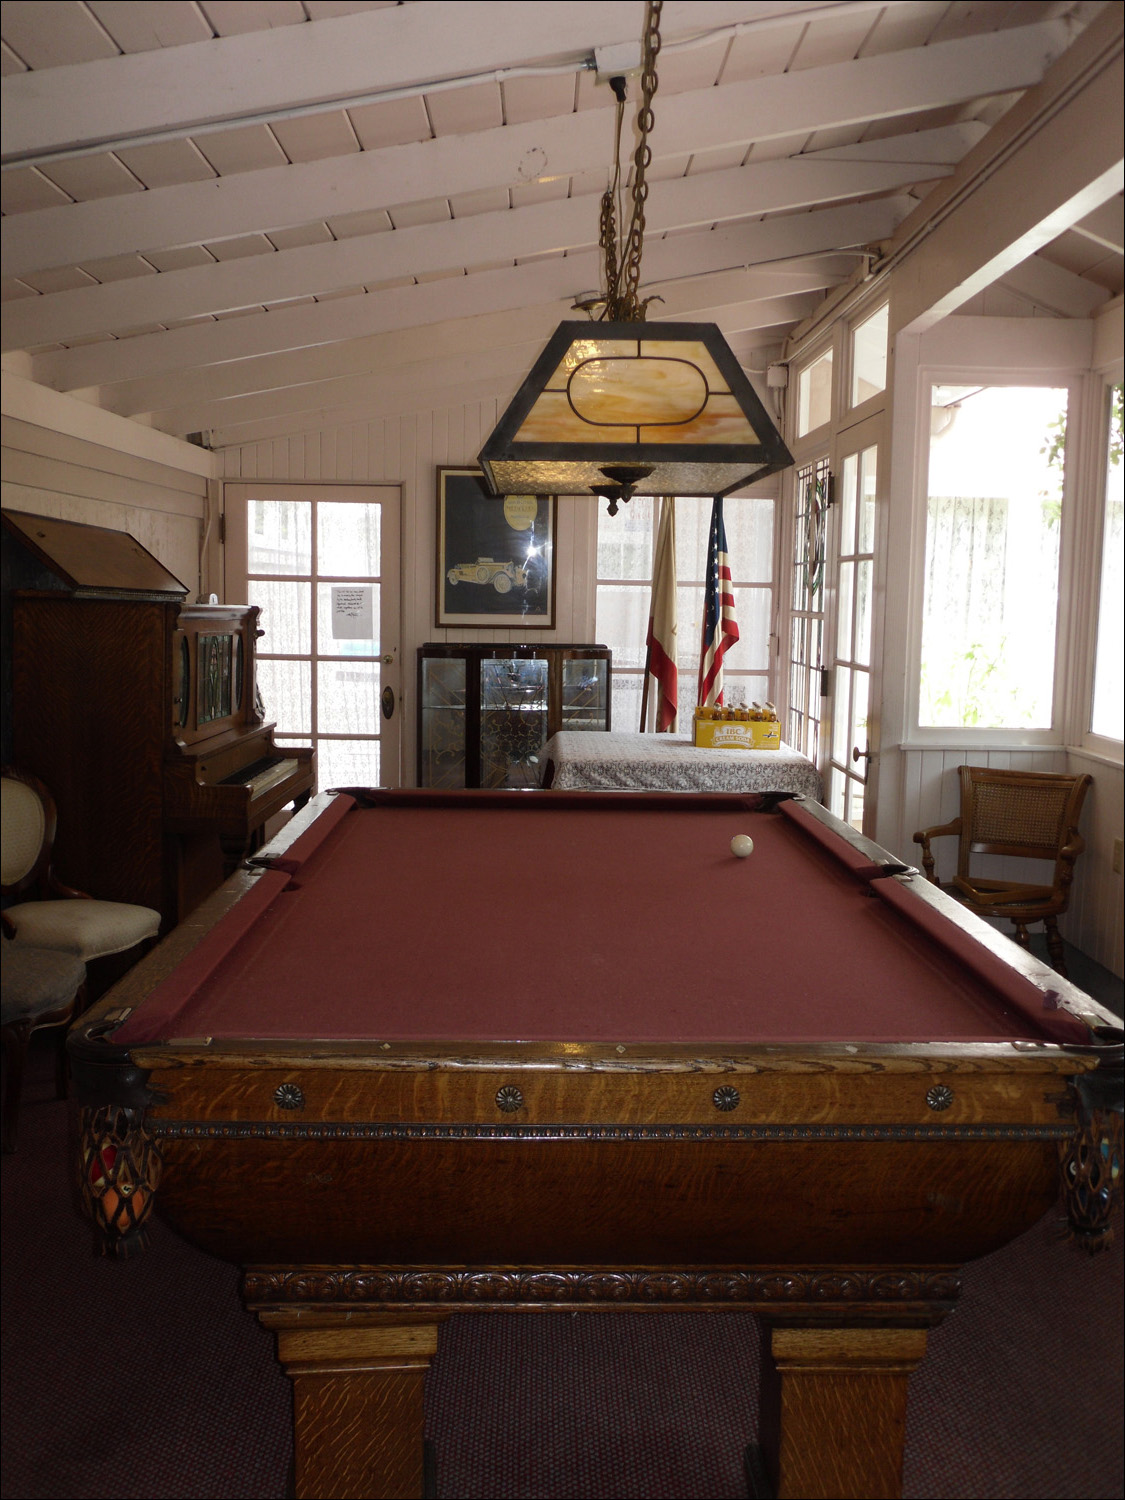 Martine Inn antique pool table